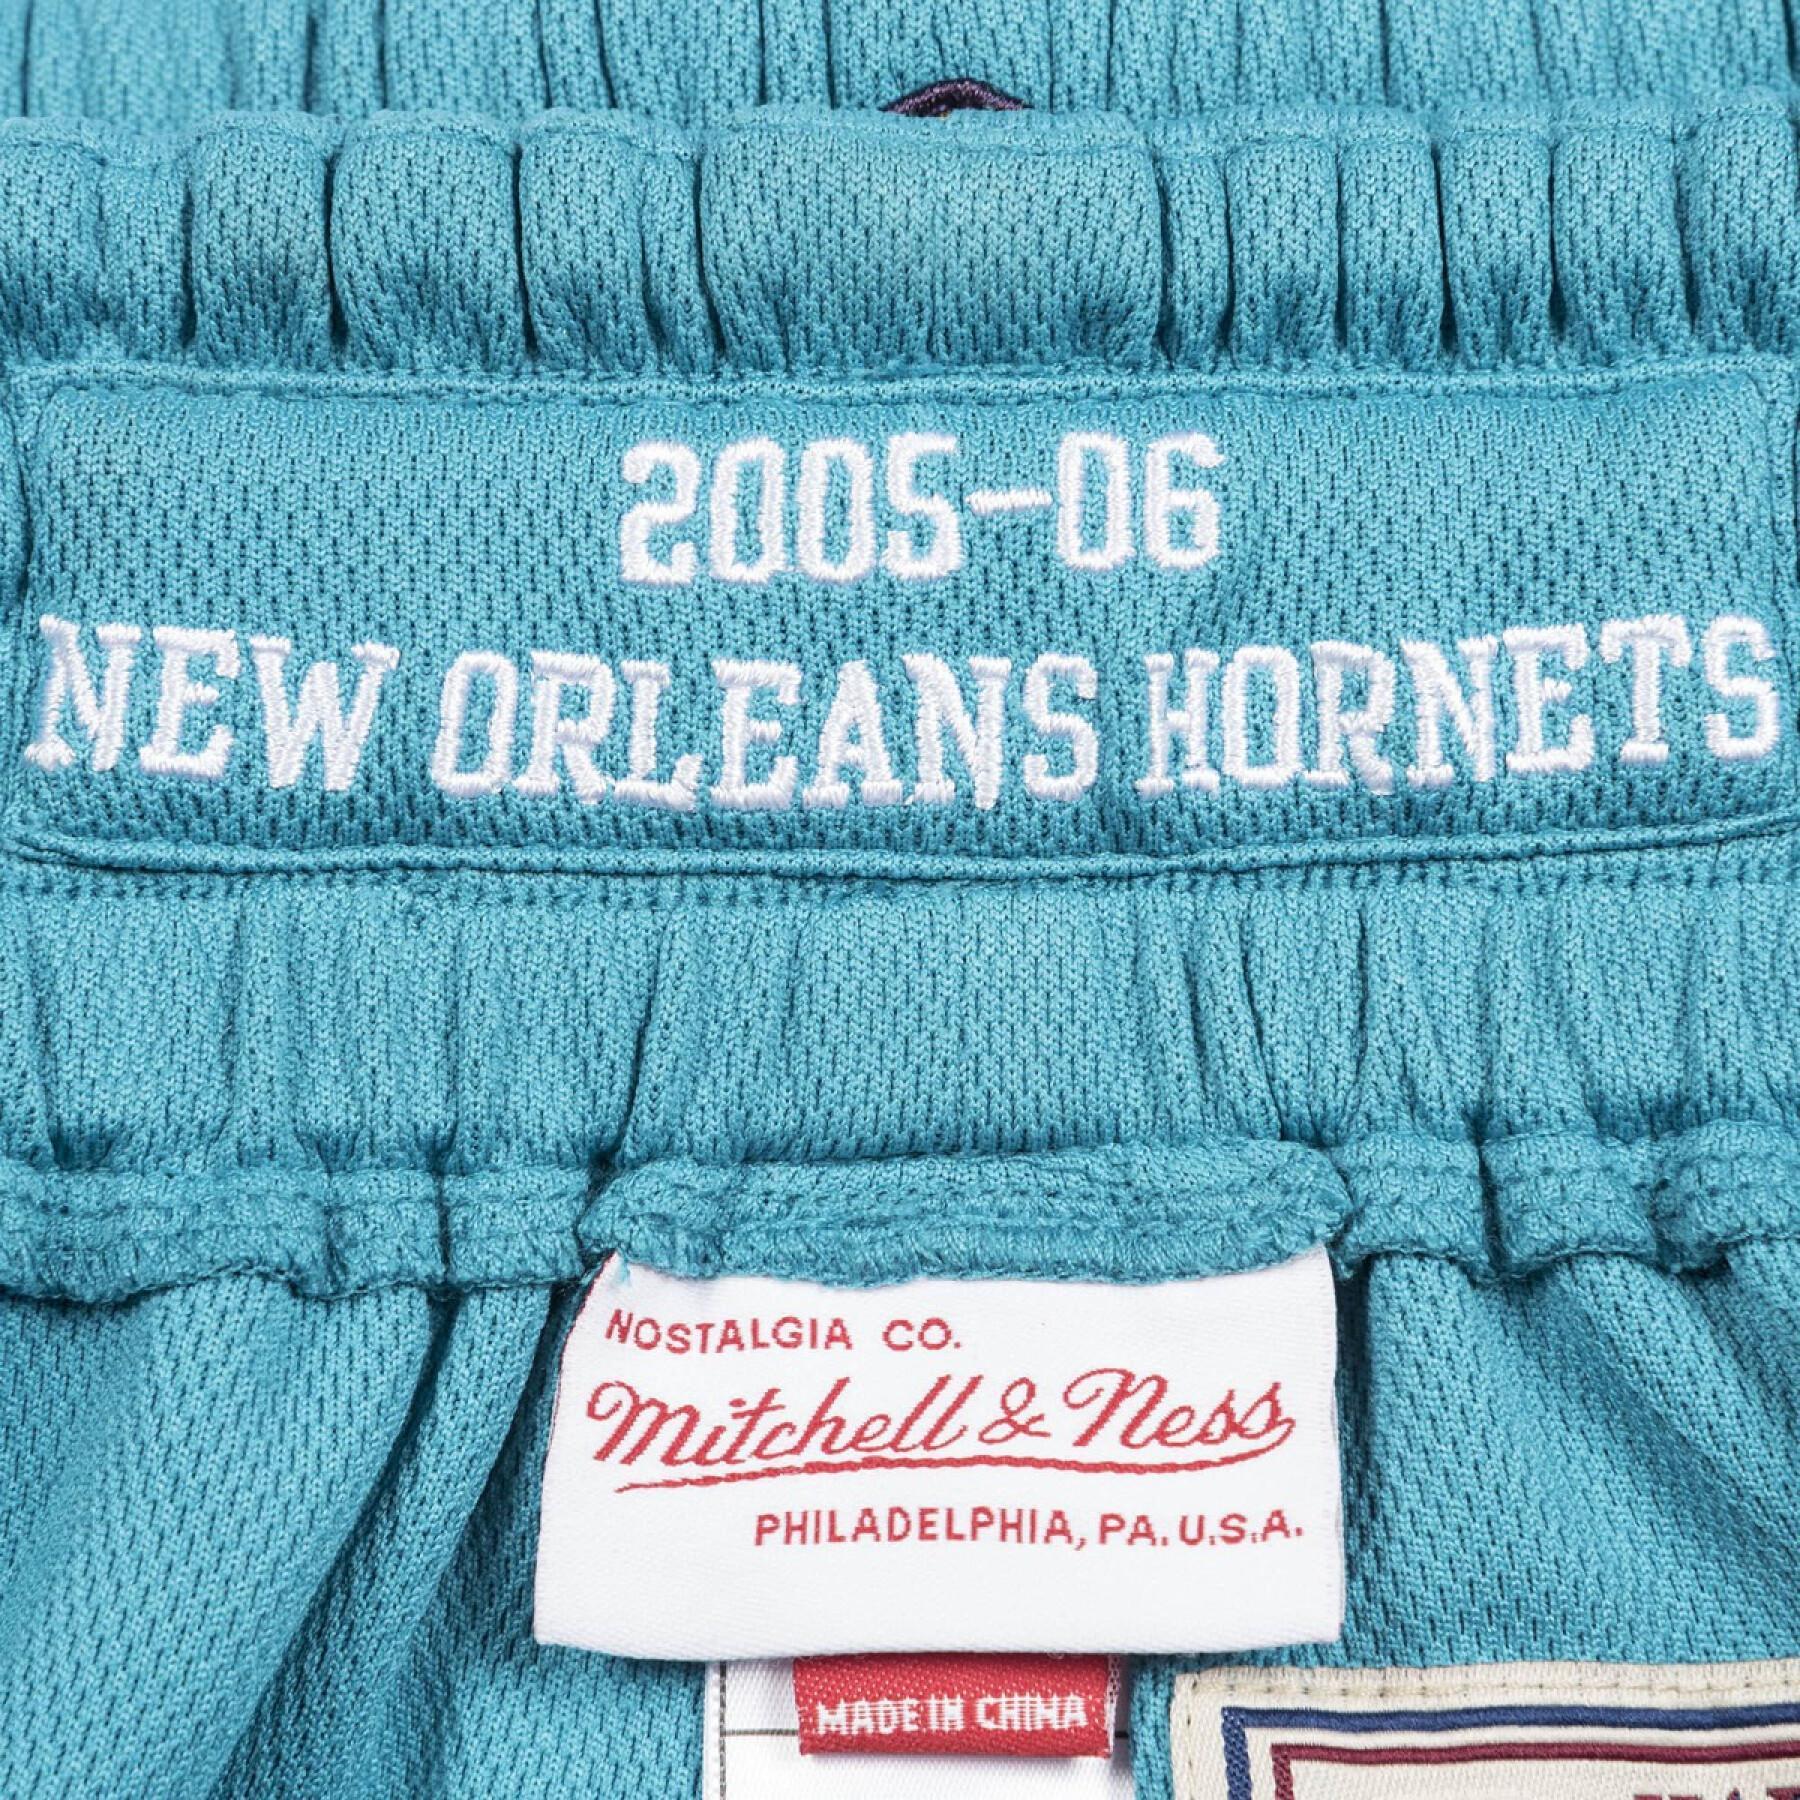 Pantaloncini autentici New Orleans Hornets nba